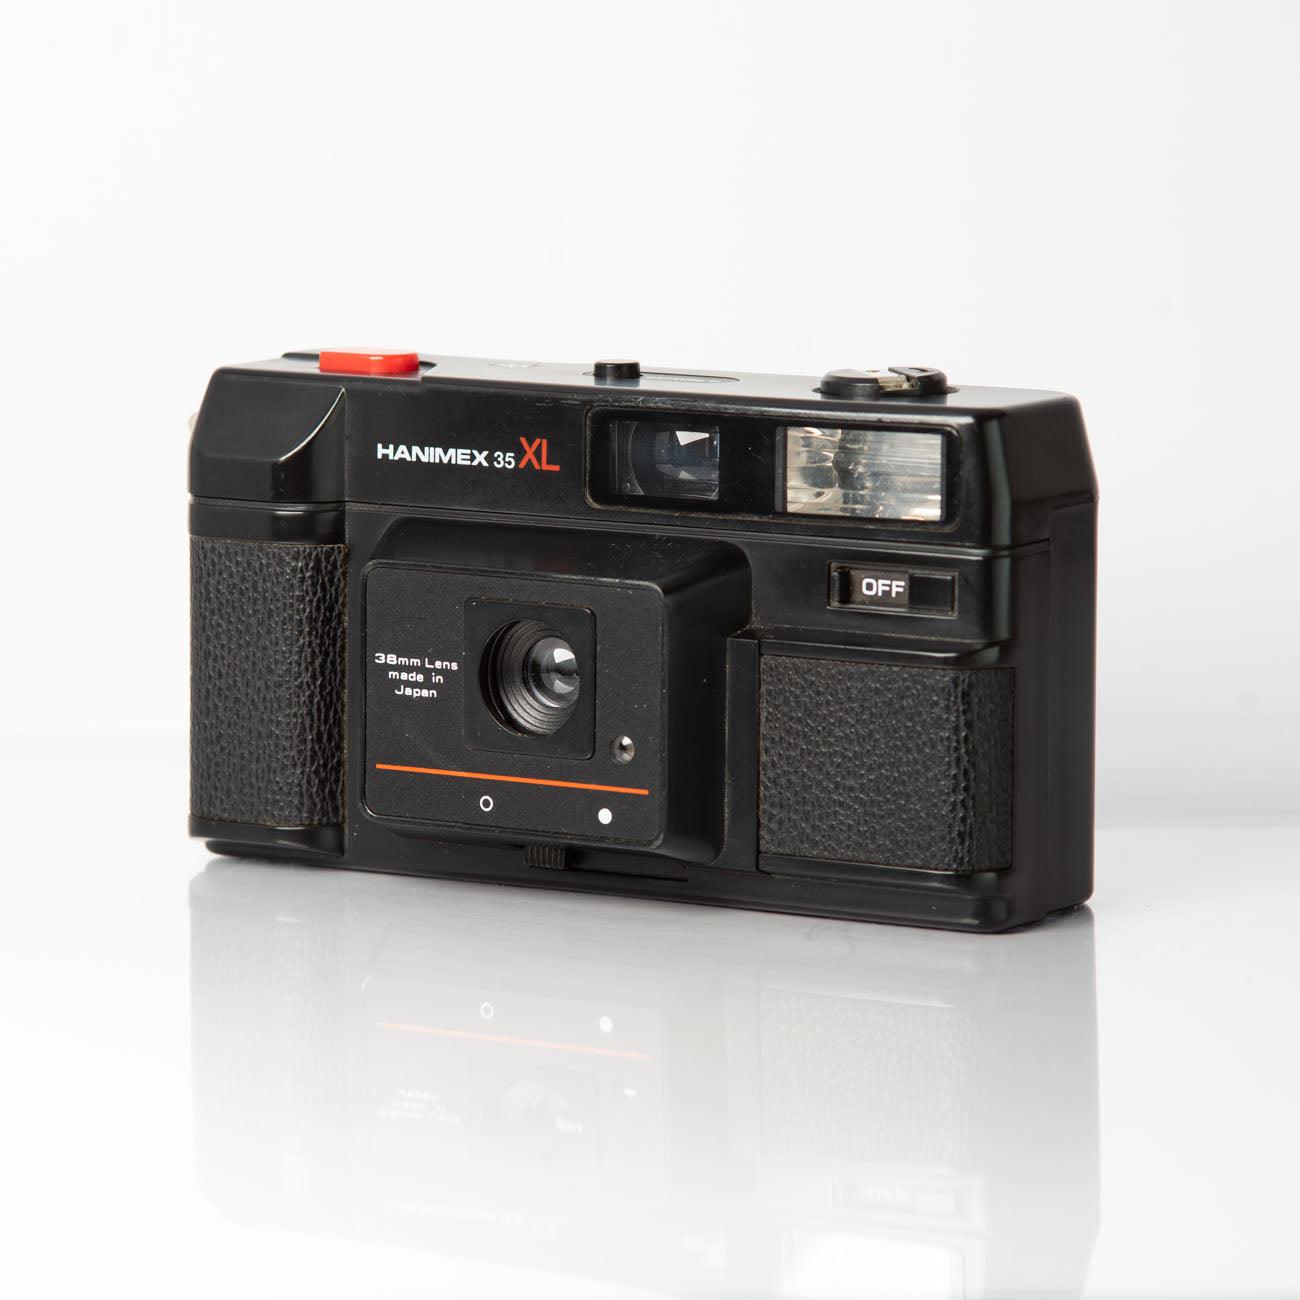 Hanimex 35 XL appareil photo argentique